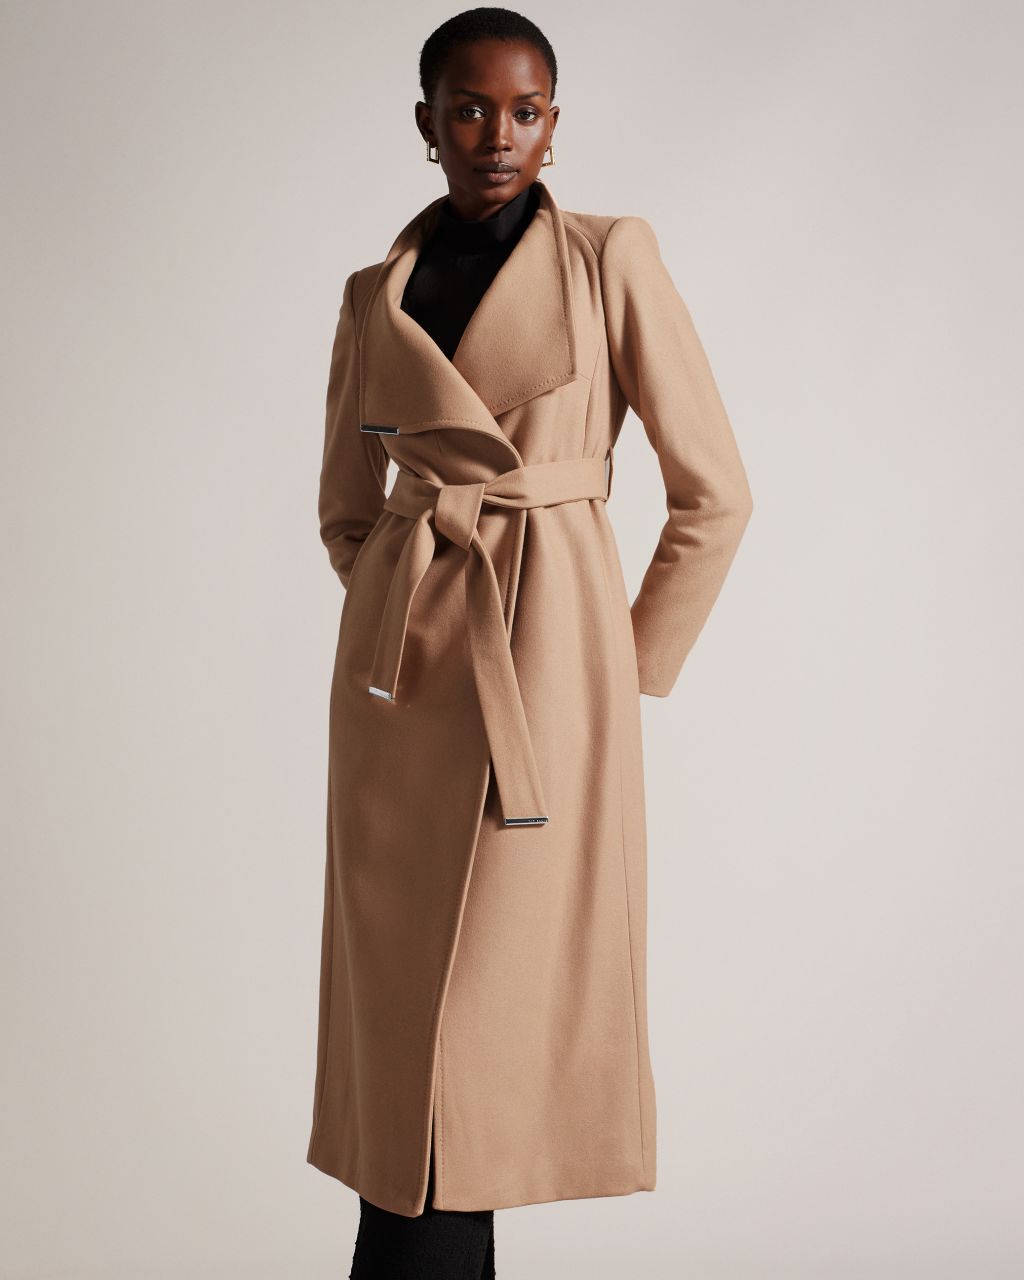 Ted Baker Women's Long Length Wool Wrap Coat in Camel, Rosell